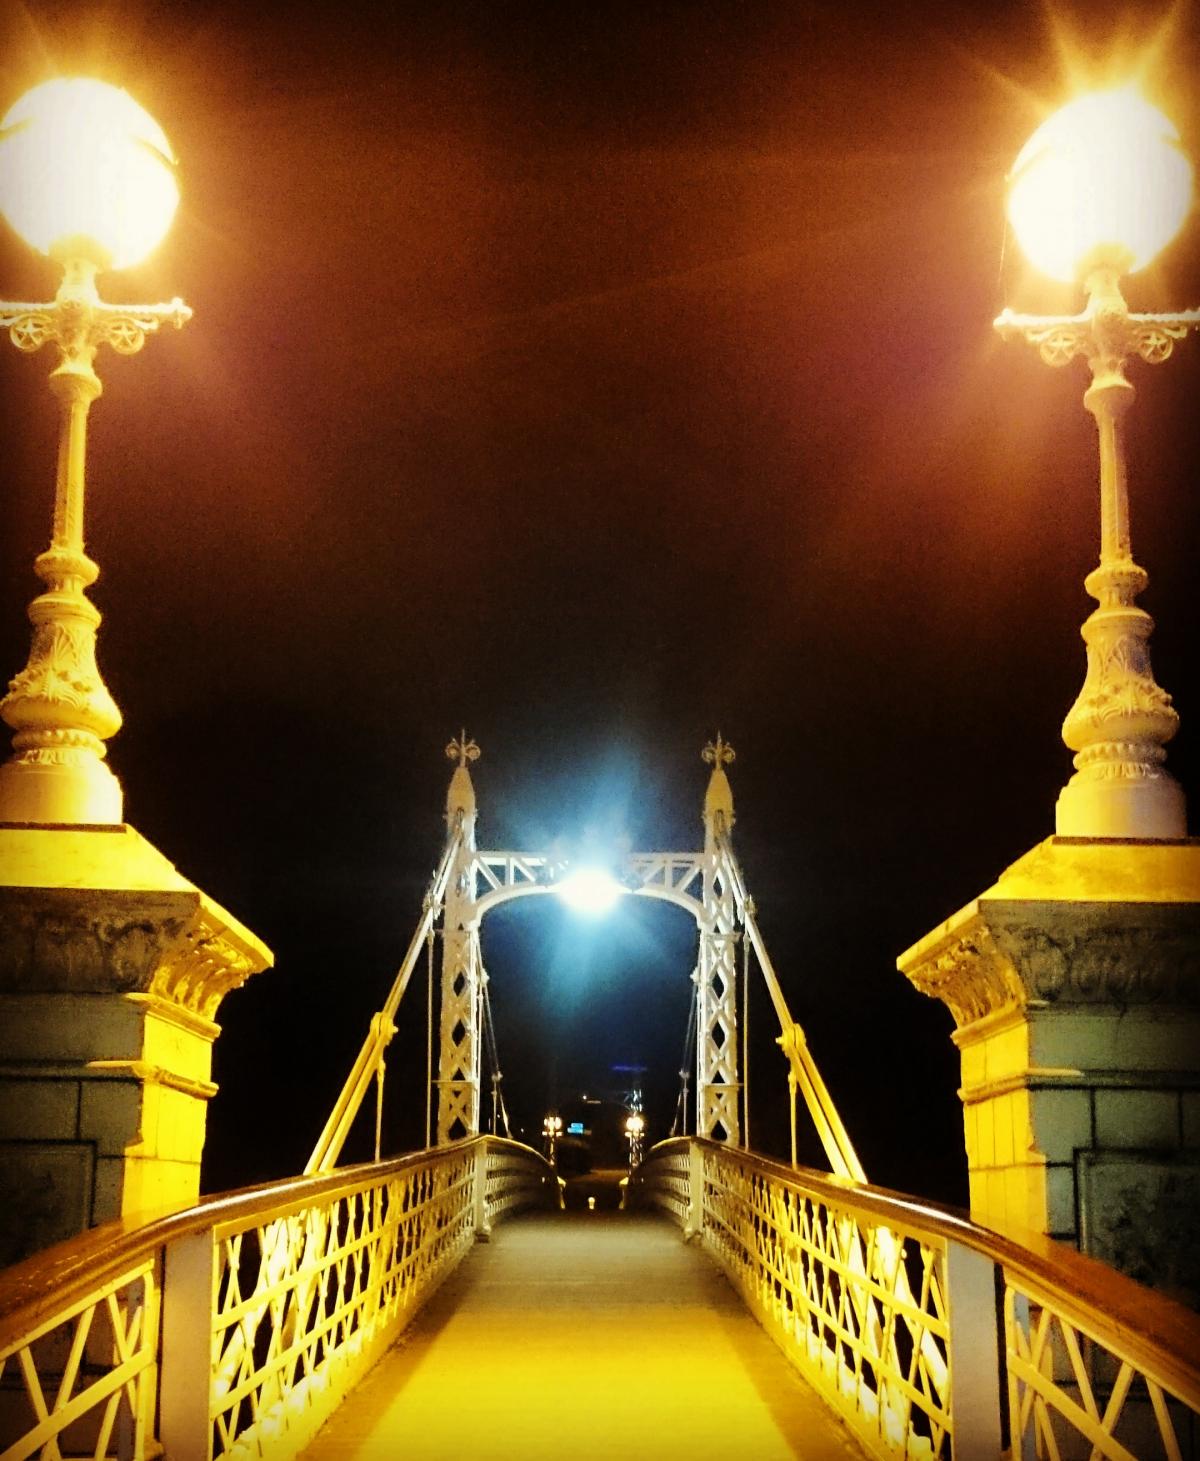 The Victoria Bridge at night. By Crista Gaunt.